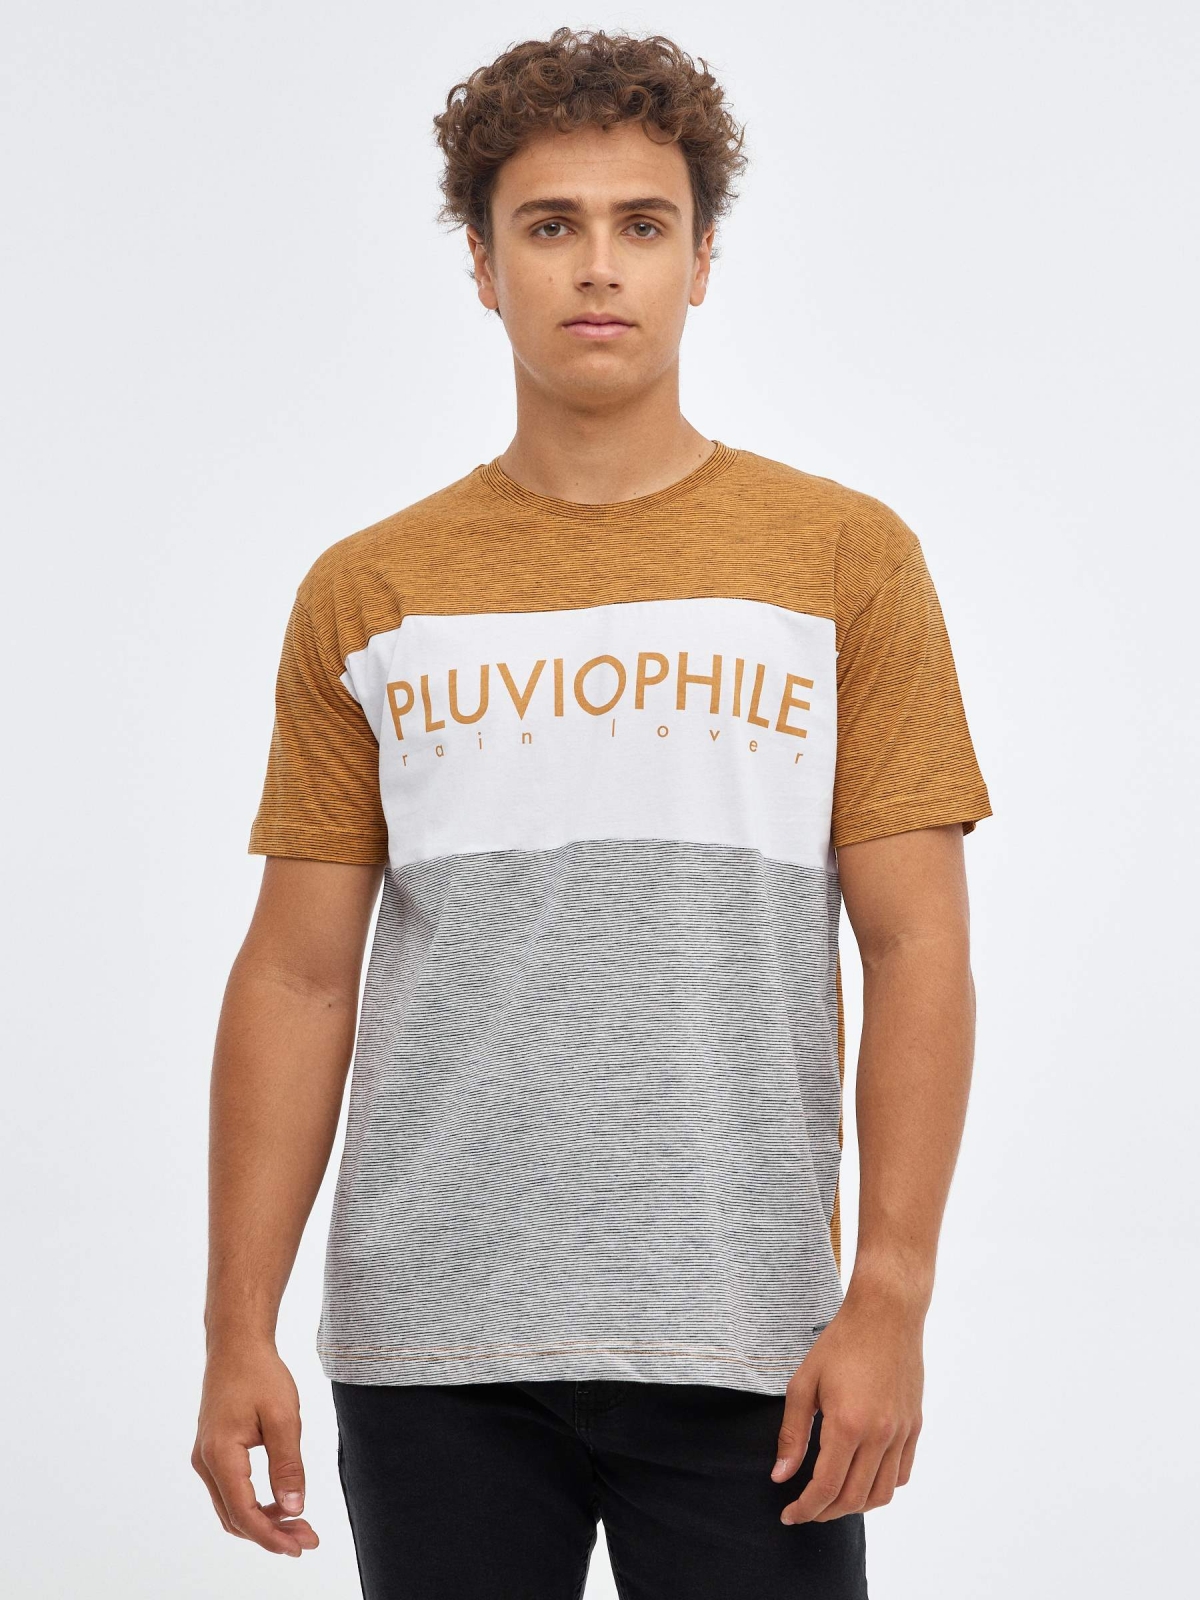 Camiseta Pluviophile ocre vista media frontal